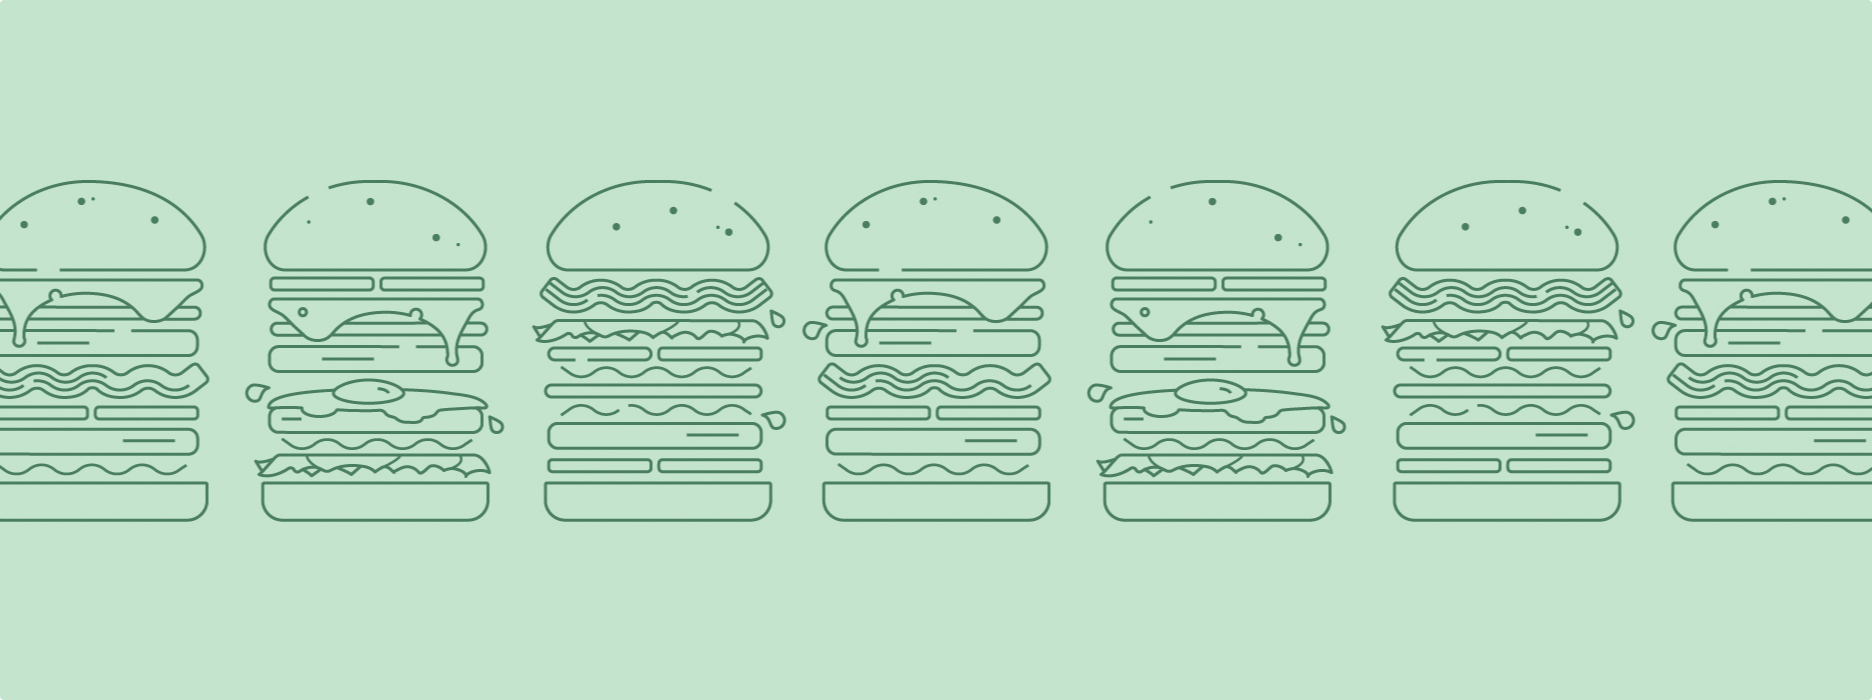 Hoof burger illustrations 